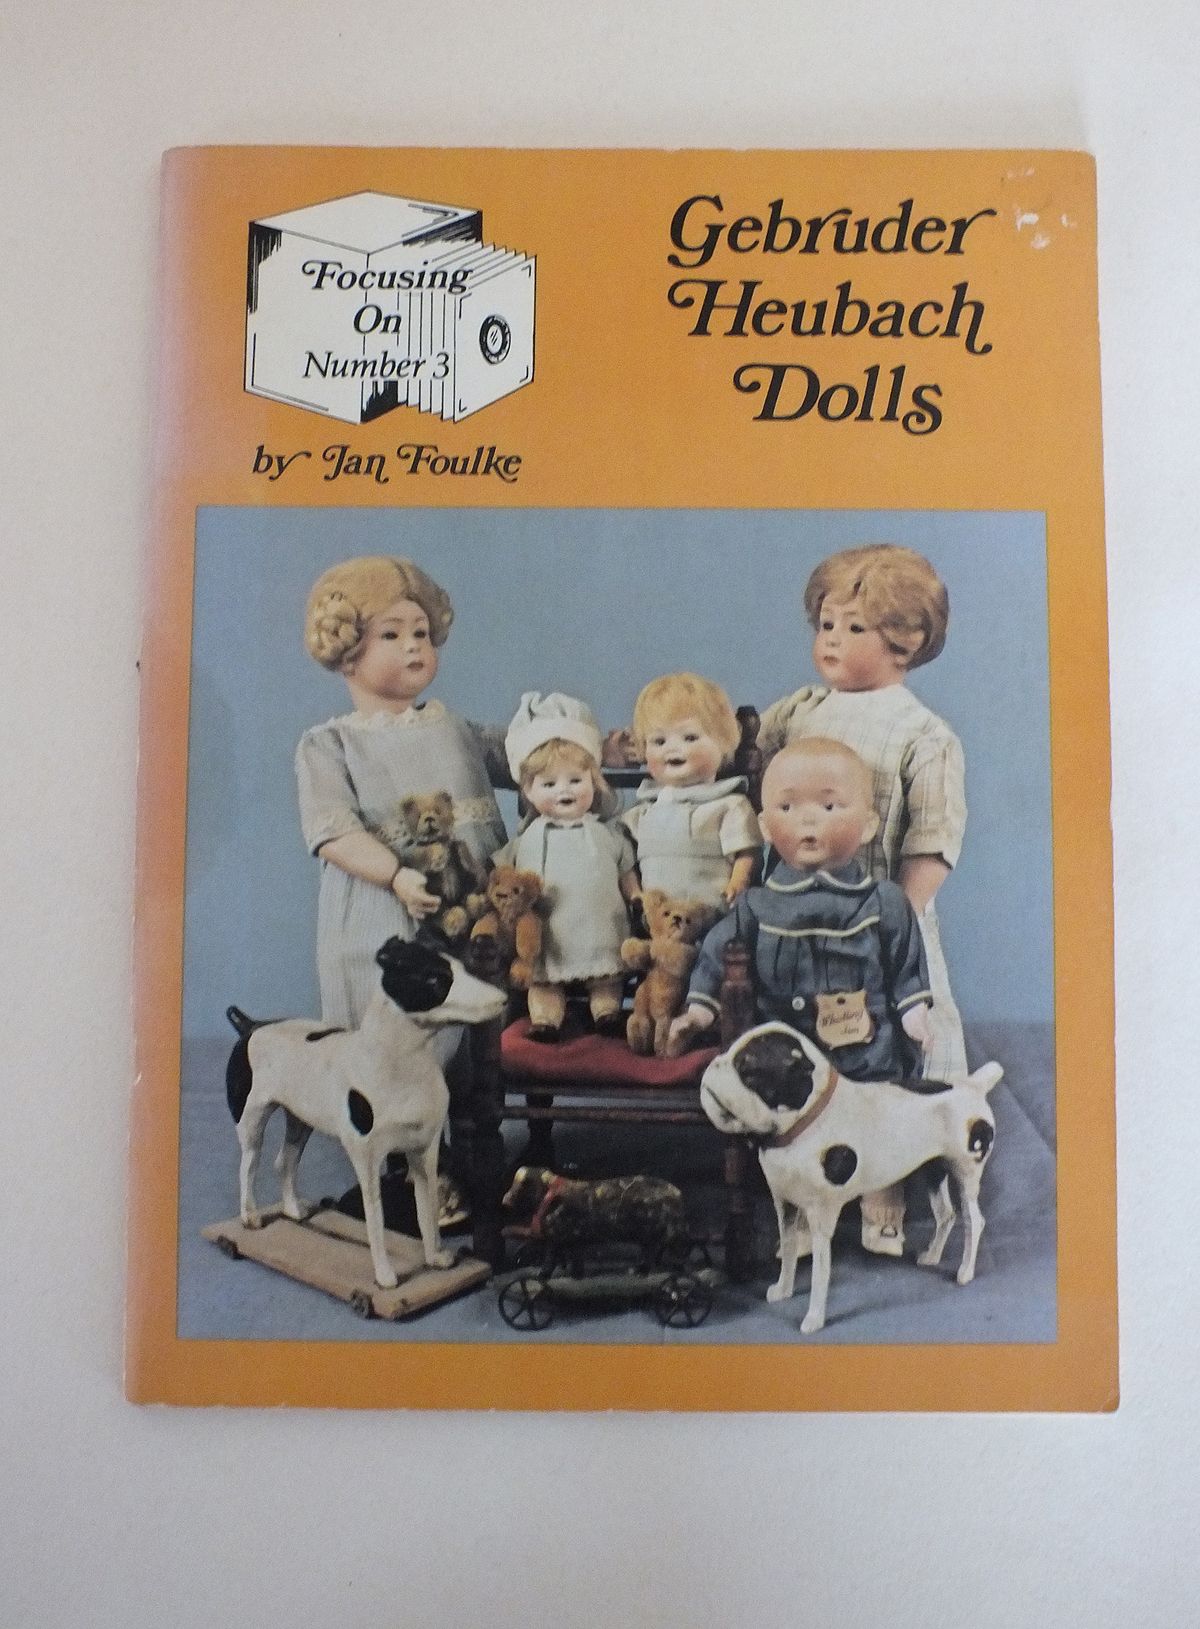 Focusing on Gebruder Heubach Dolls: The Art of Gebruder Heubach Dolls 